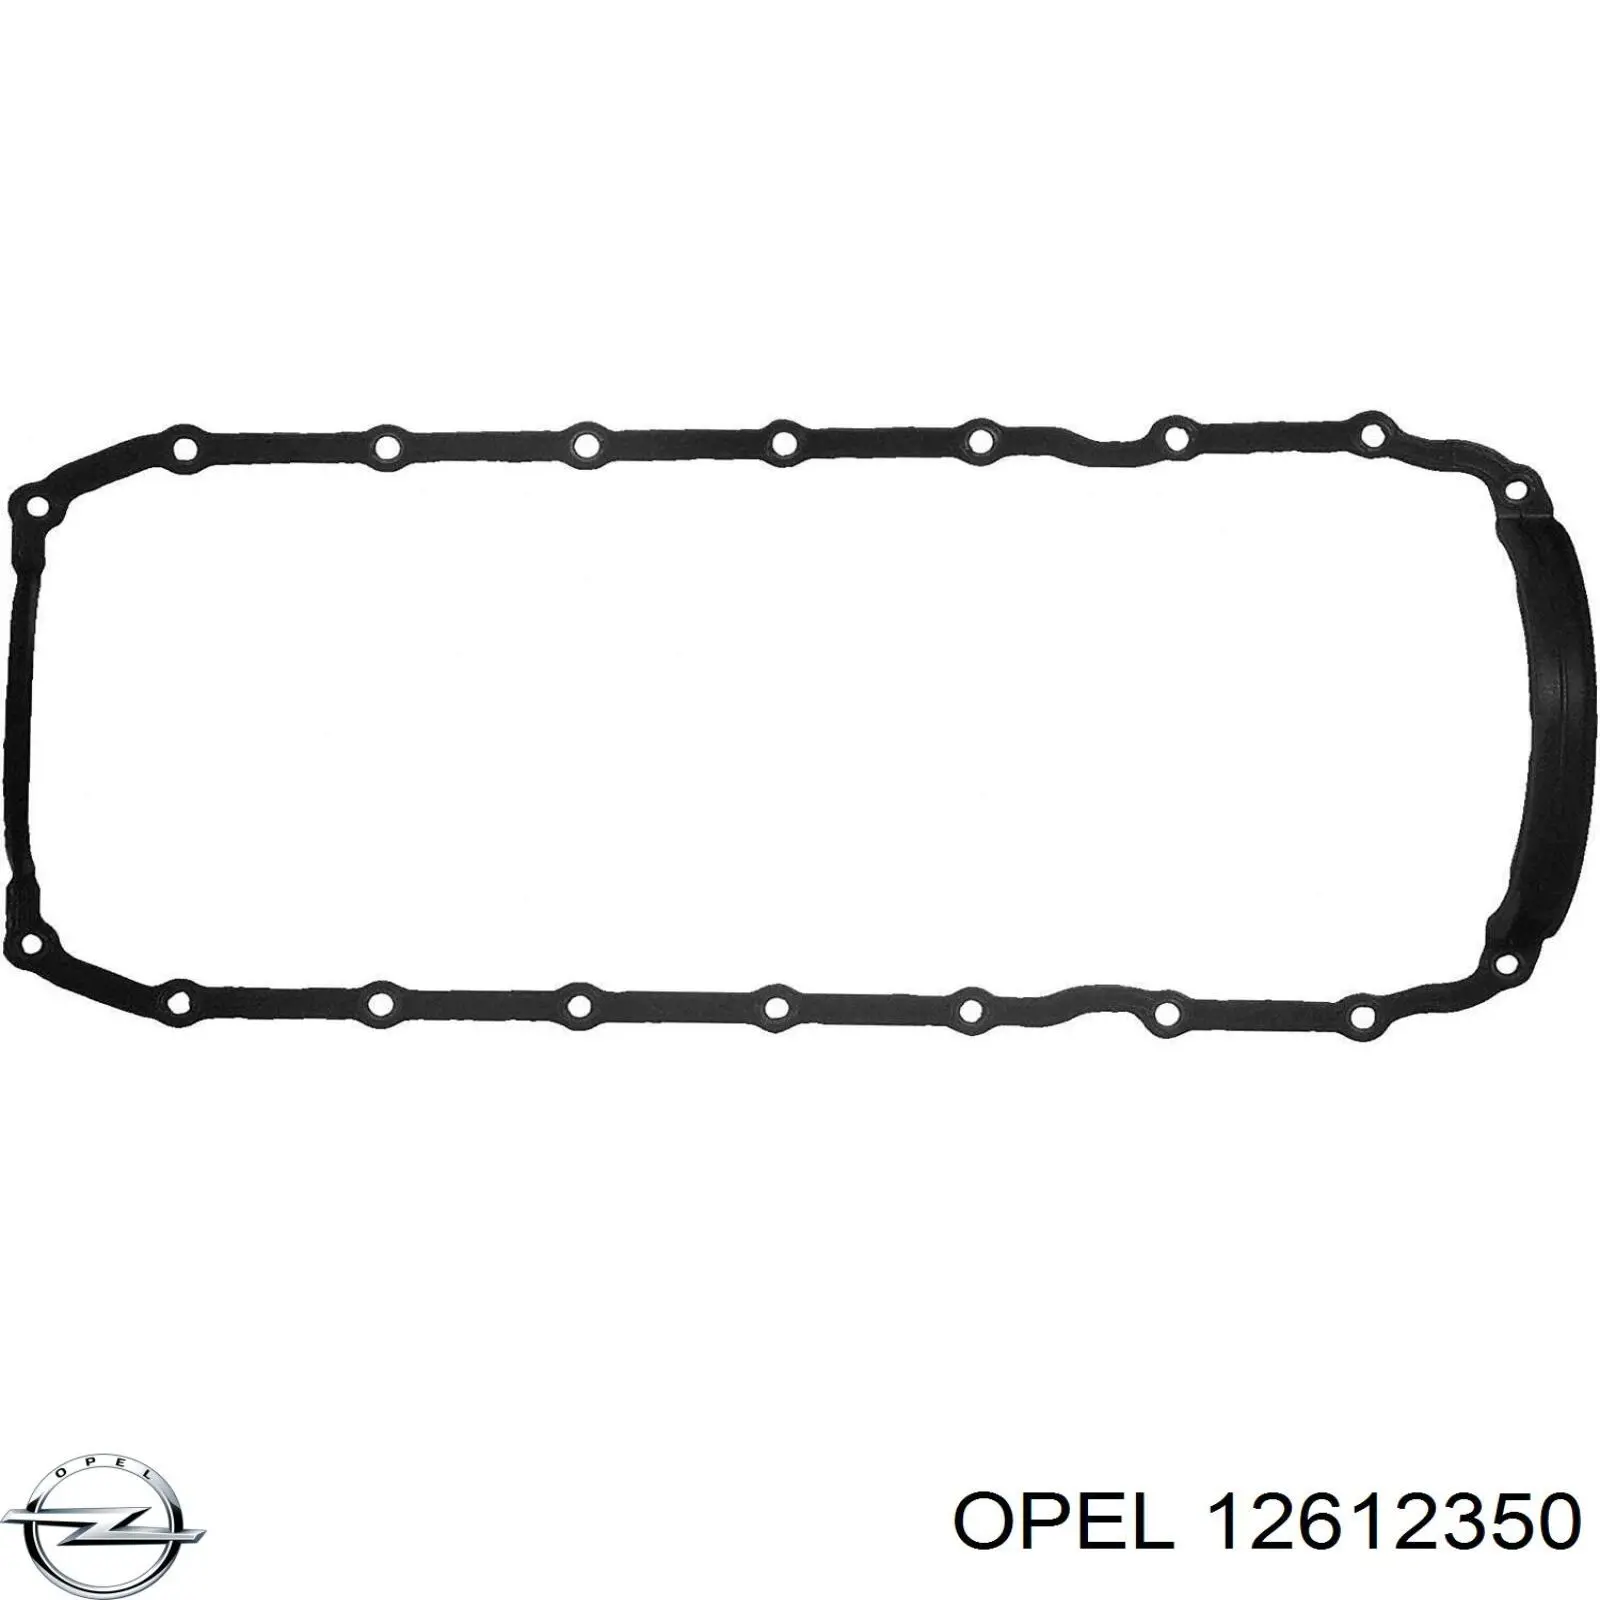 Прокладка поддона картера двигателя Opel 12612350